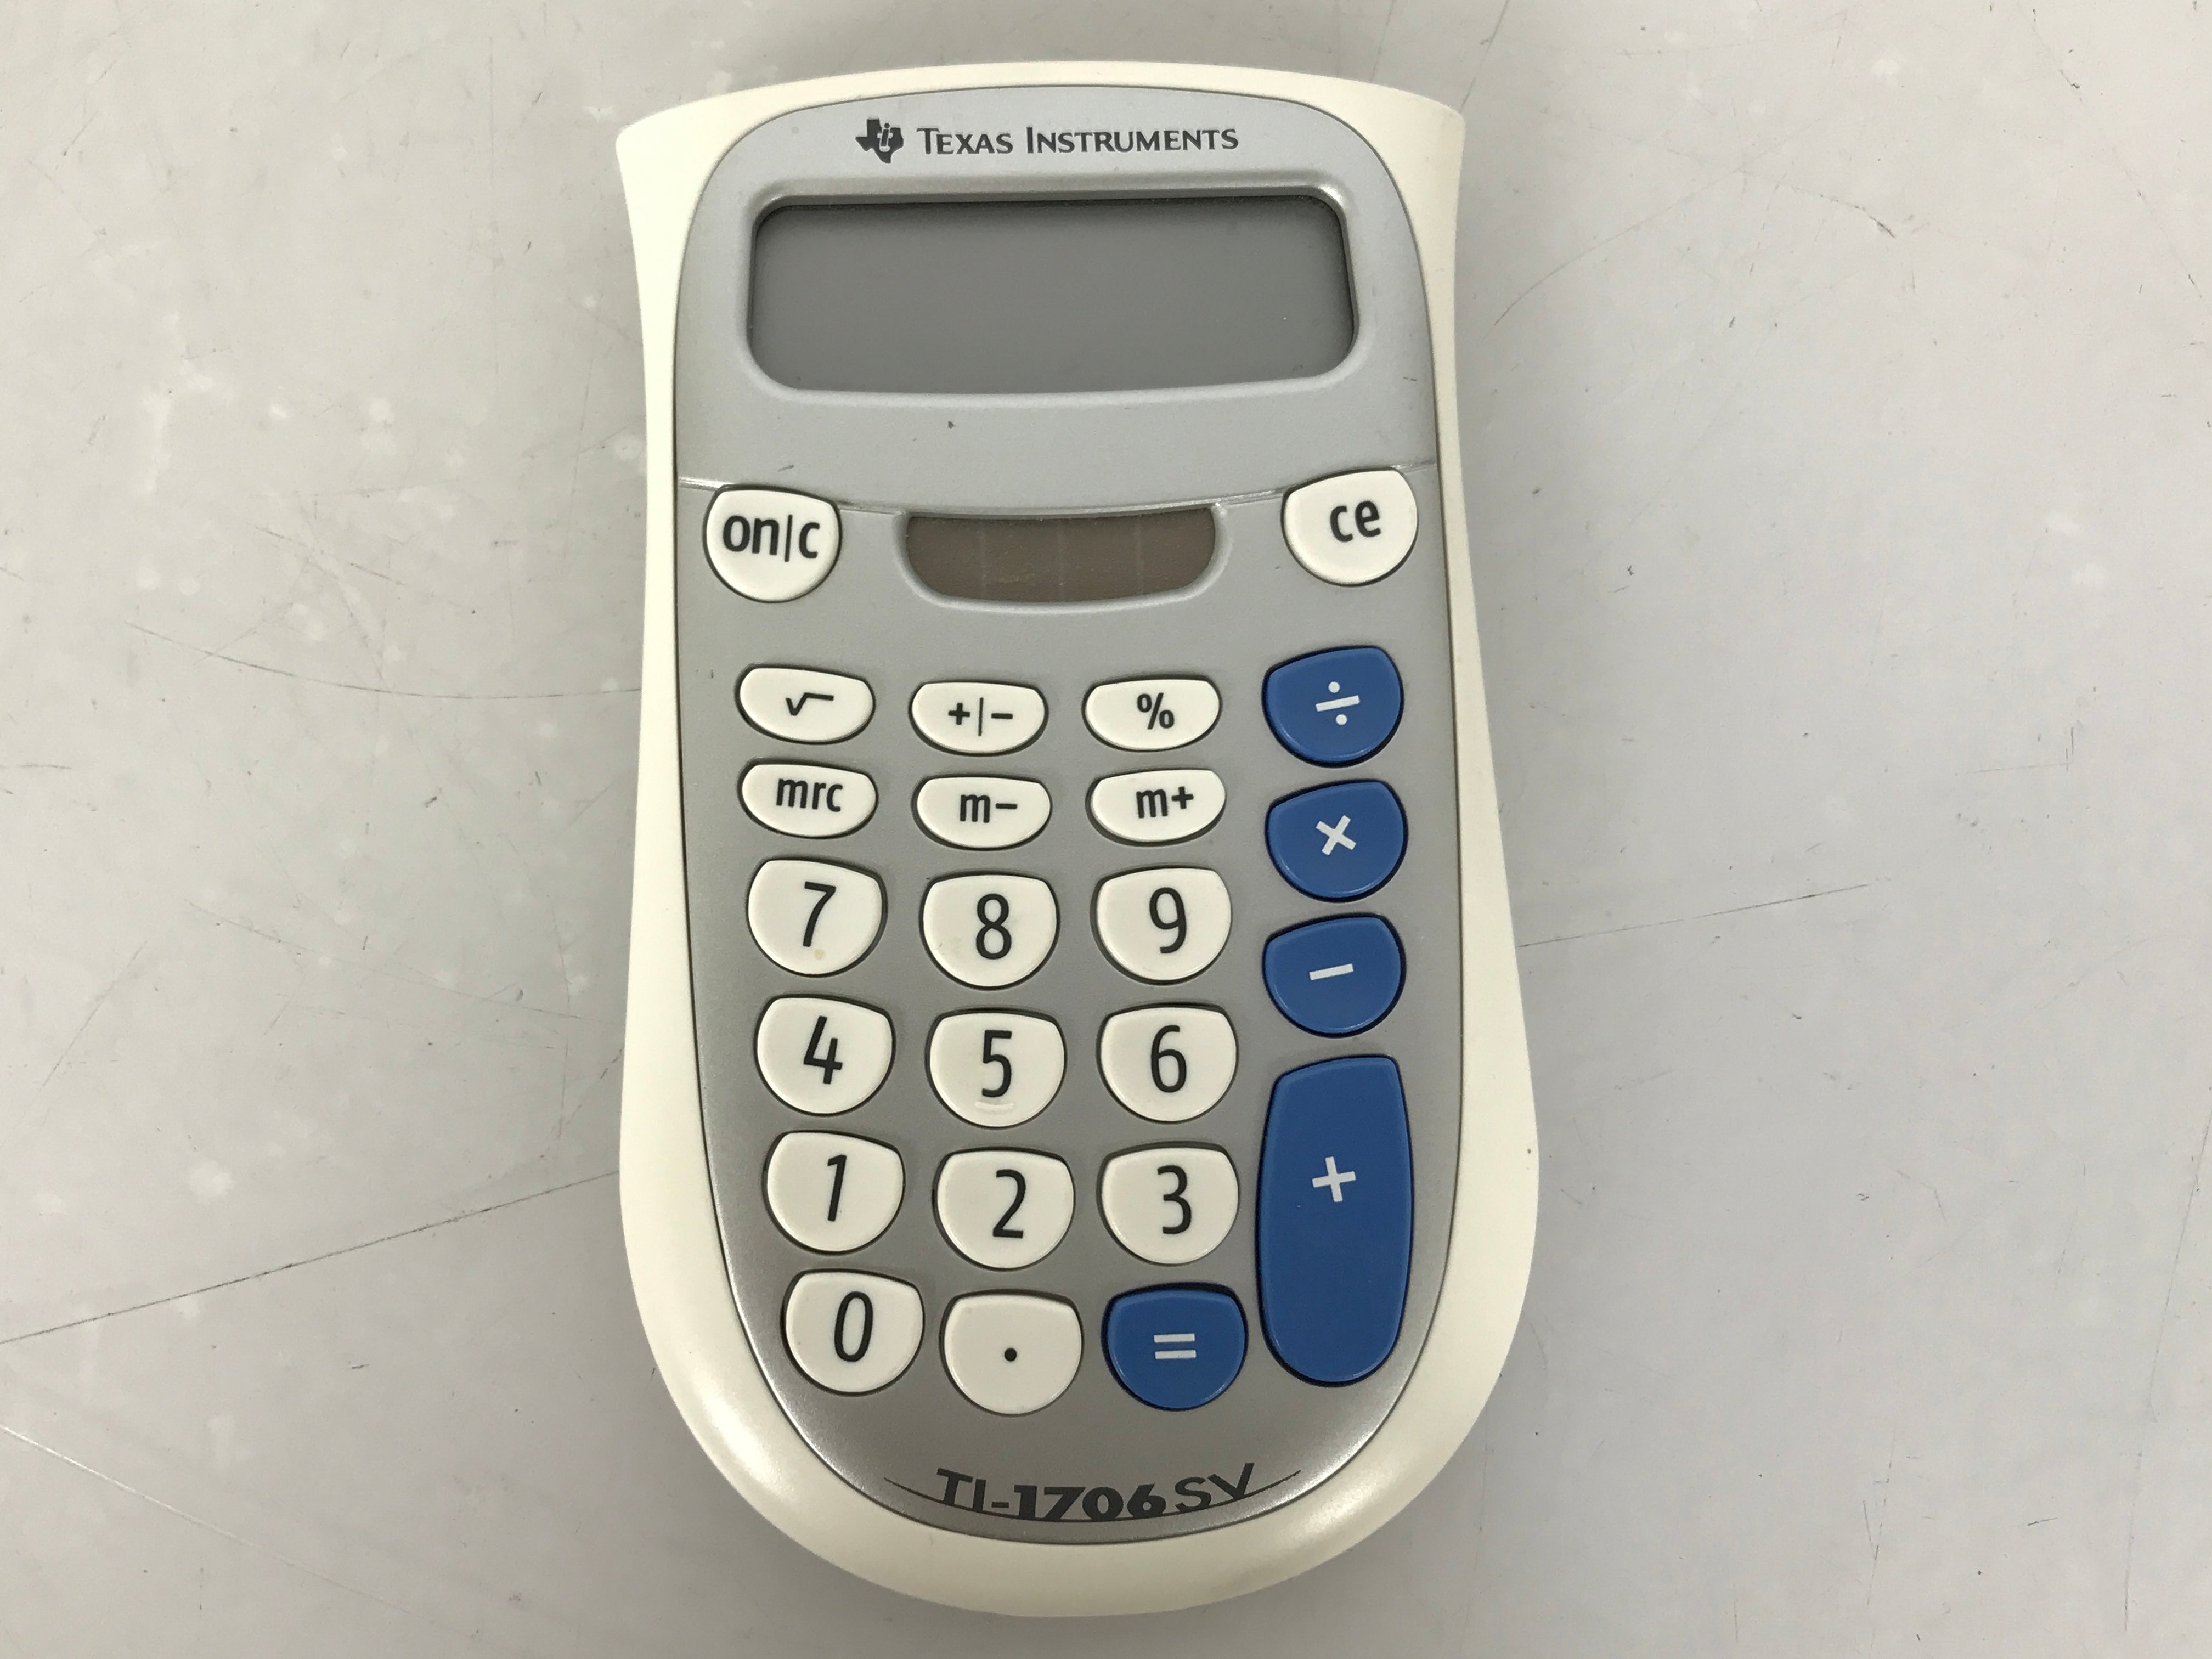 Texas Instruments TI-1706SV Scientific Calculator